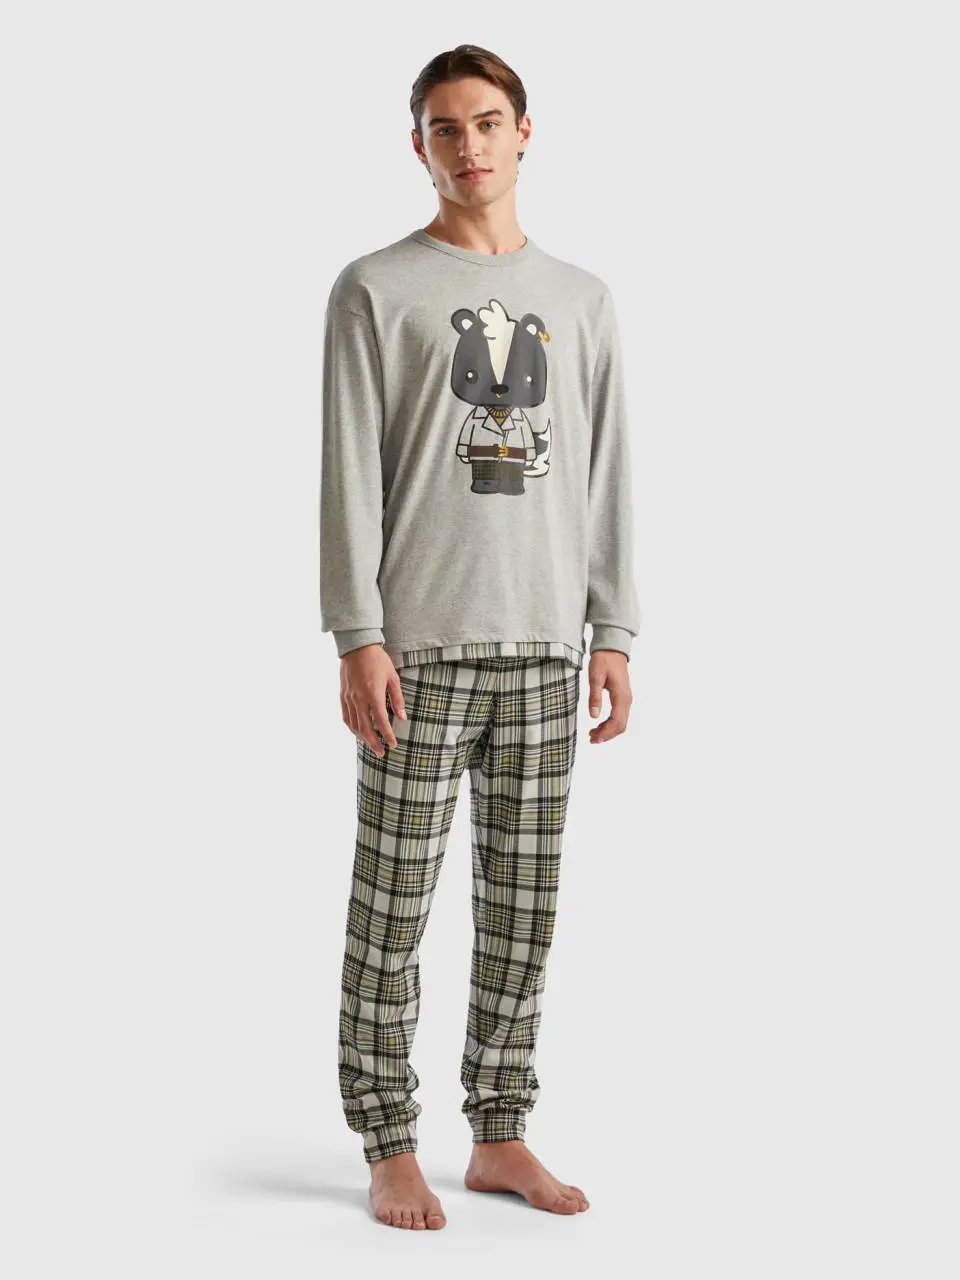 Benetton long pyjamas with mascot print. 1